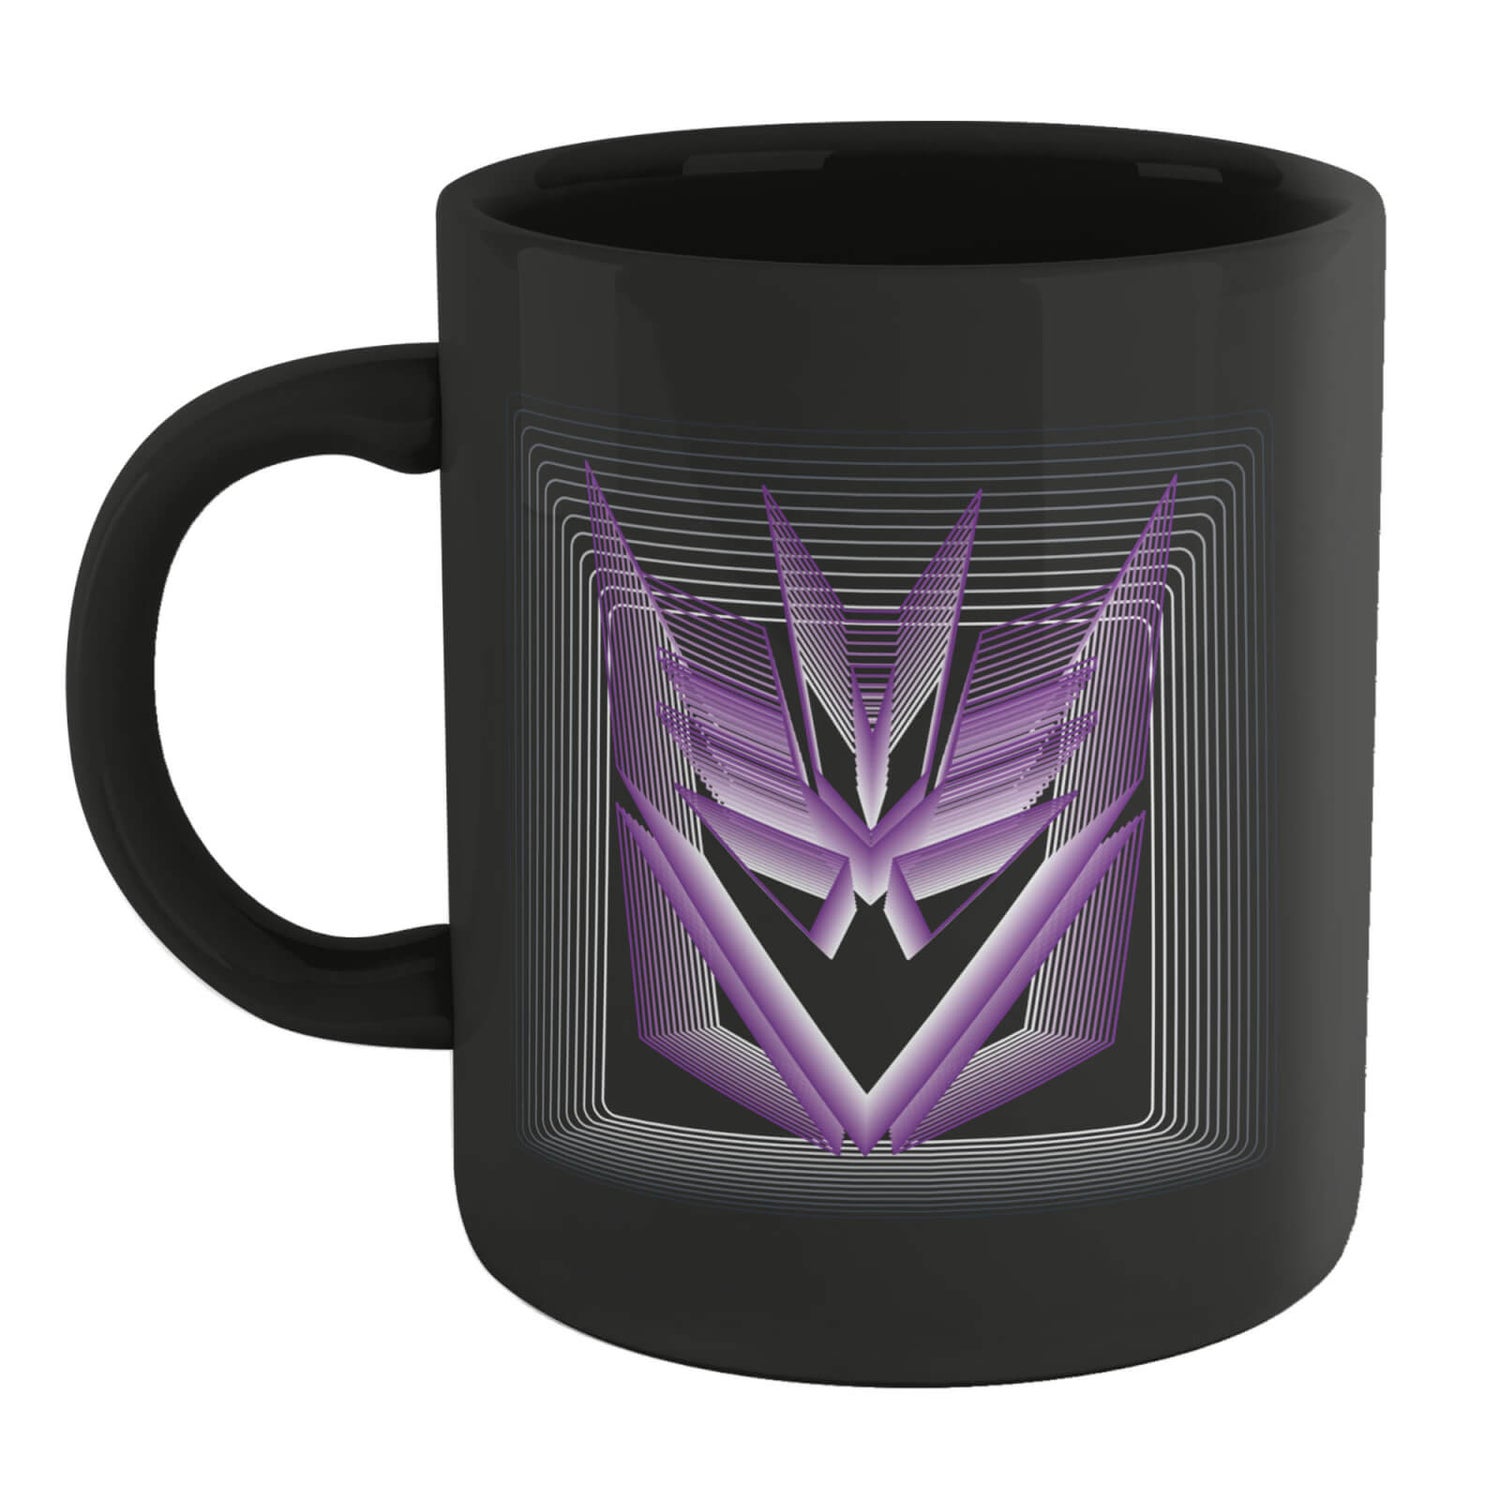 Transformers Decepticons Neon Mug - Black